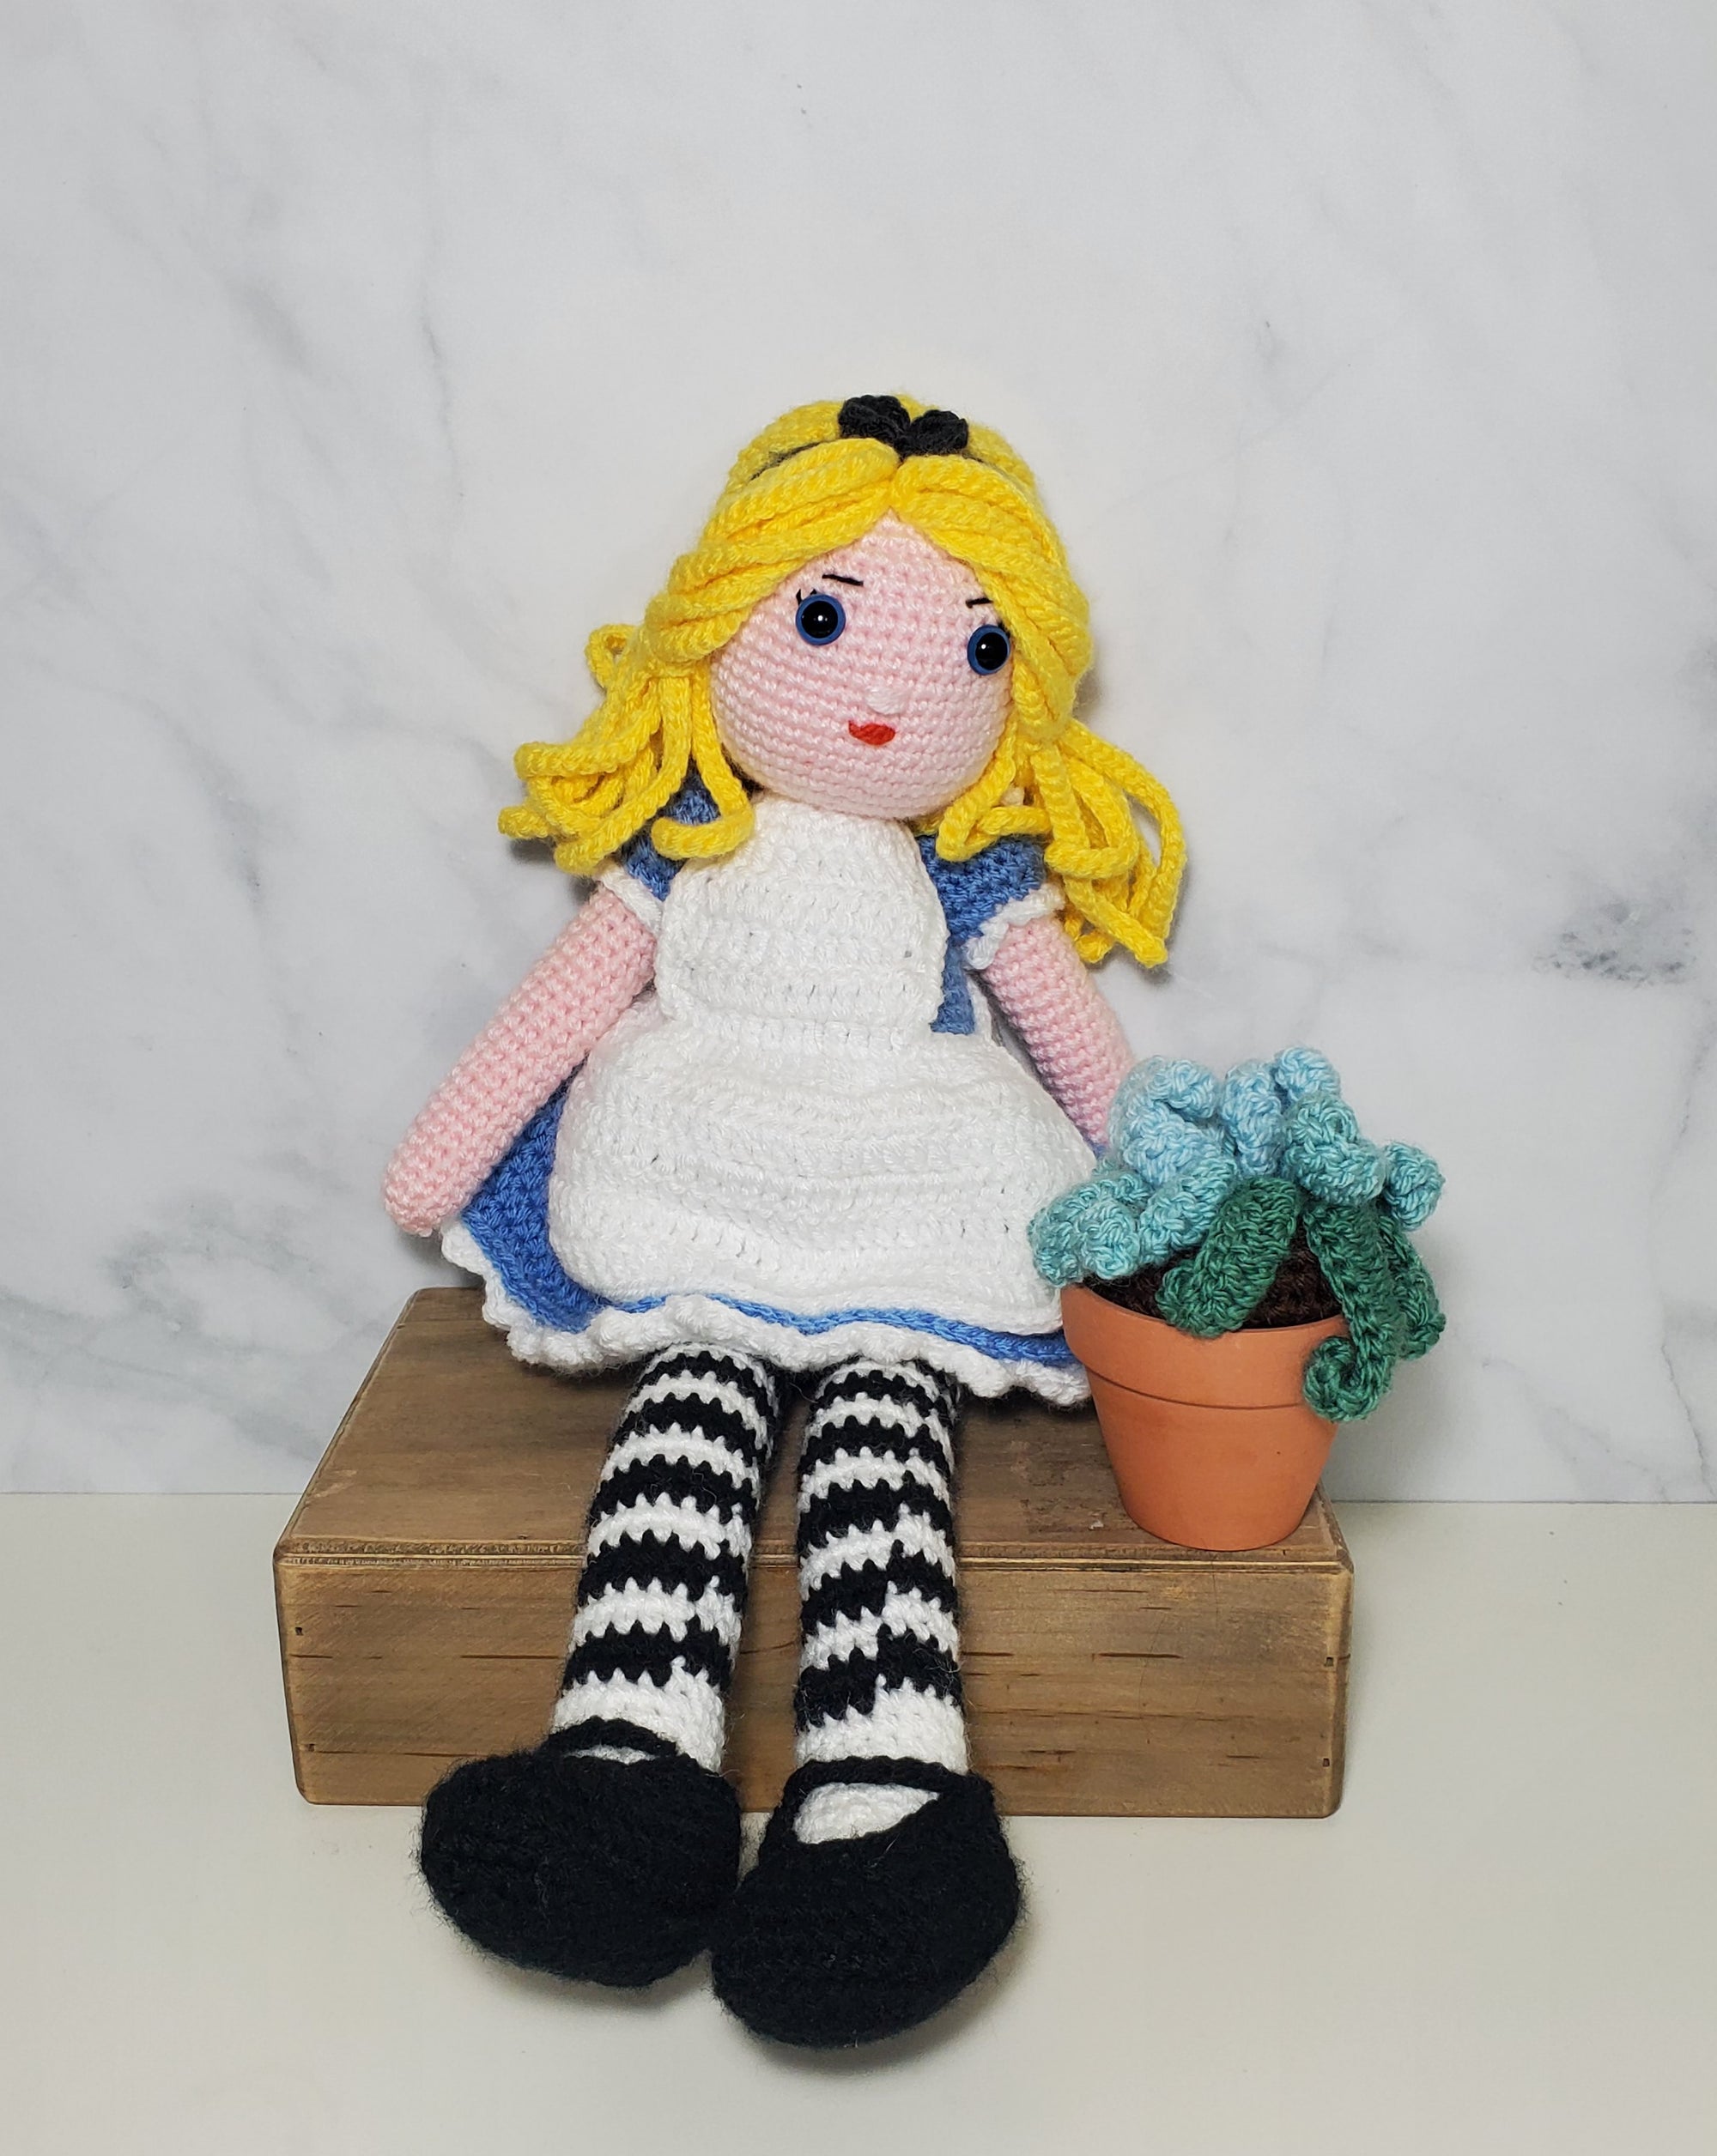 Crochet Character - Alice in Wonderland - Large